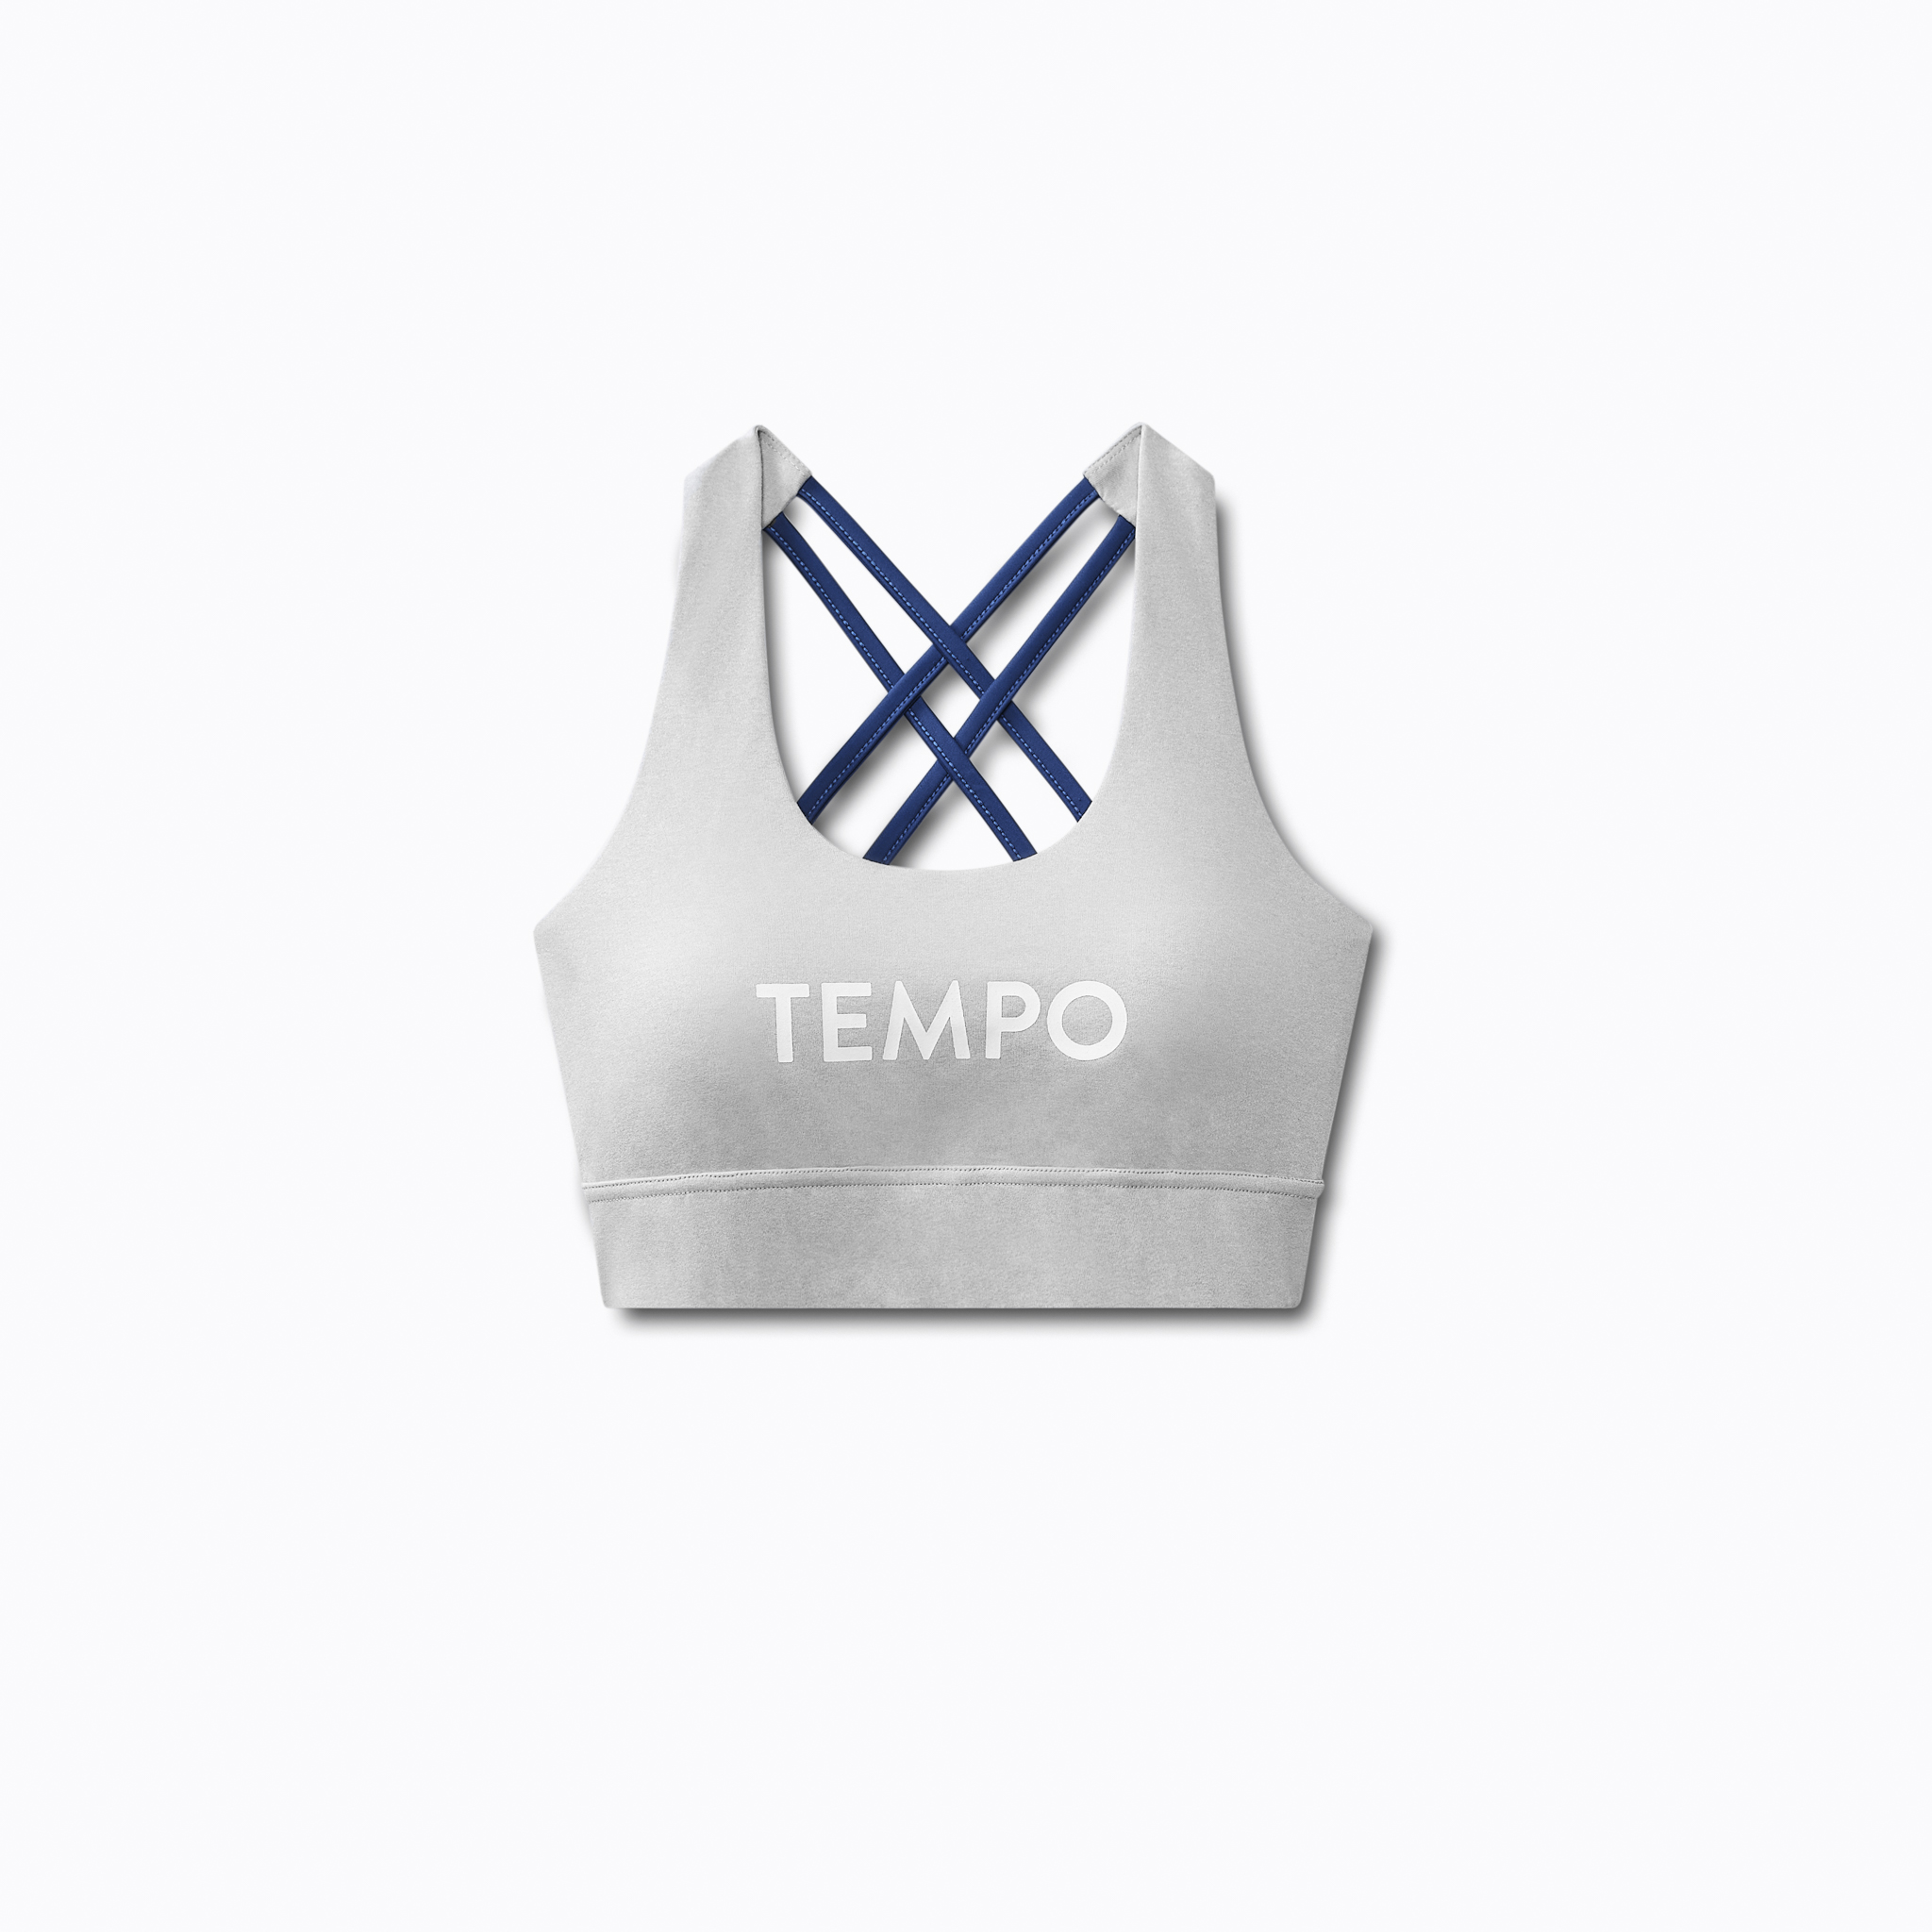 Momentum Sports Bra – Grey with Blue – Tempo Apparel Store